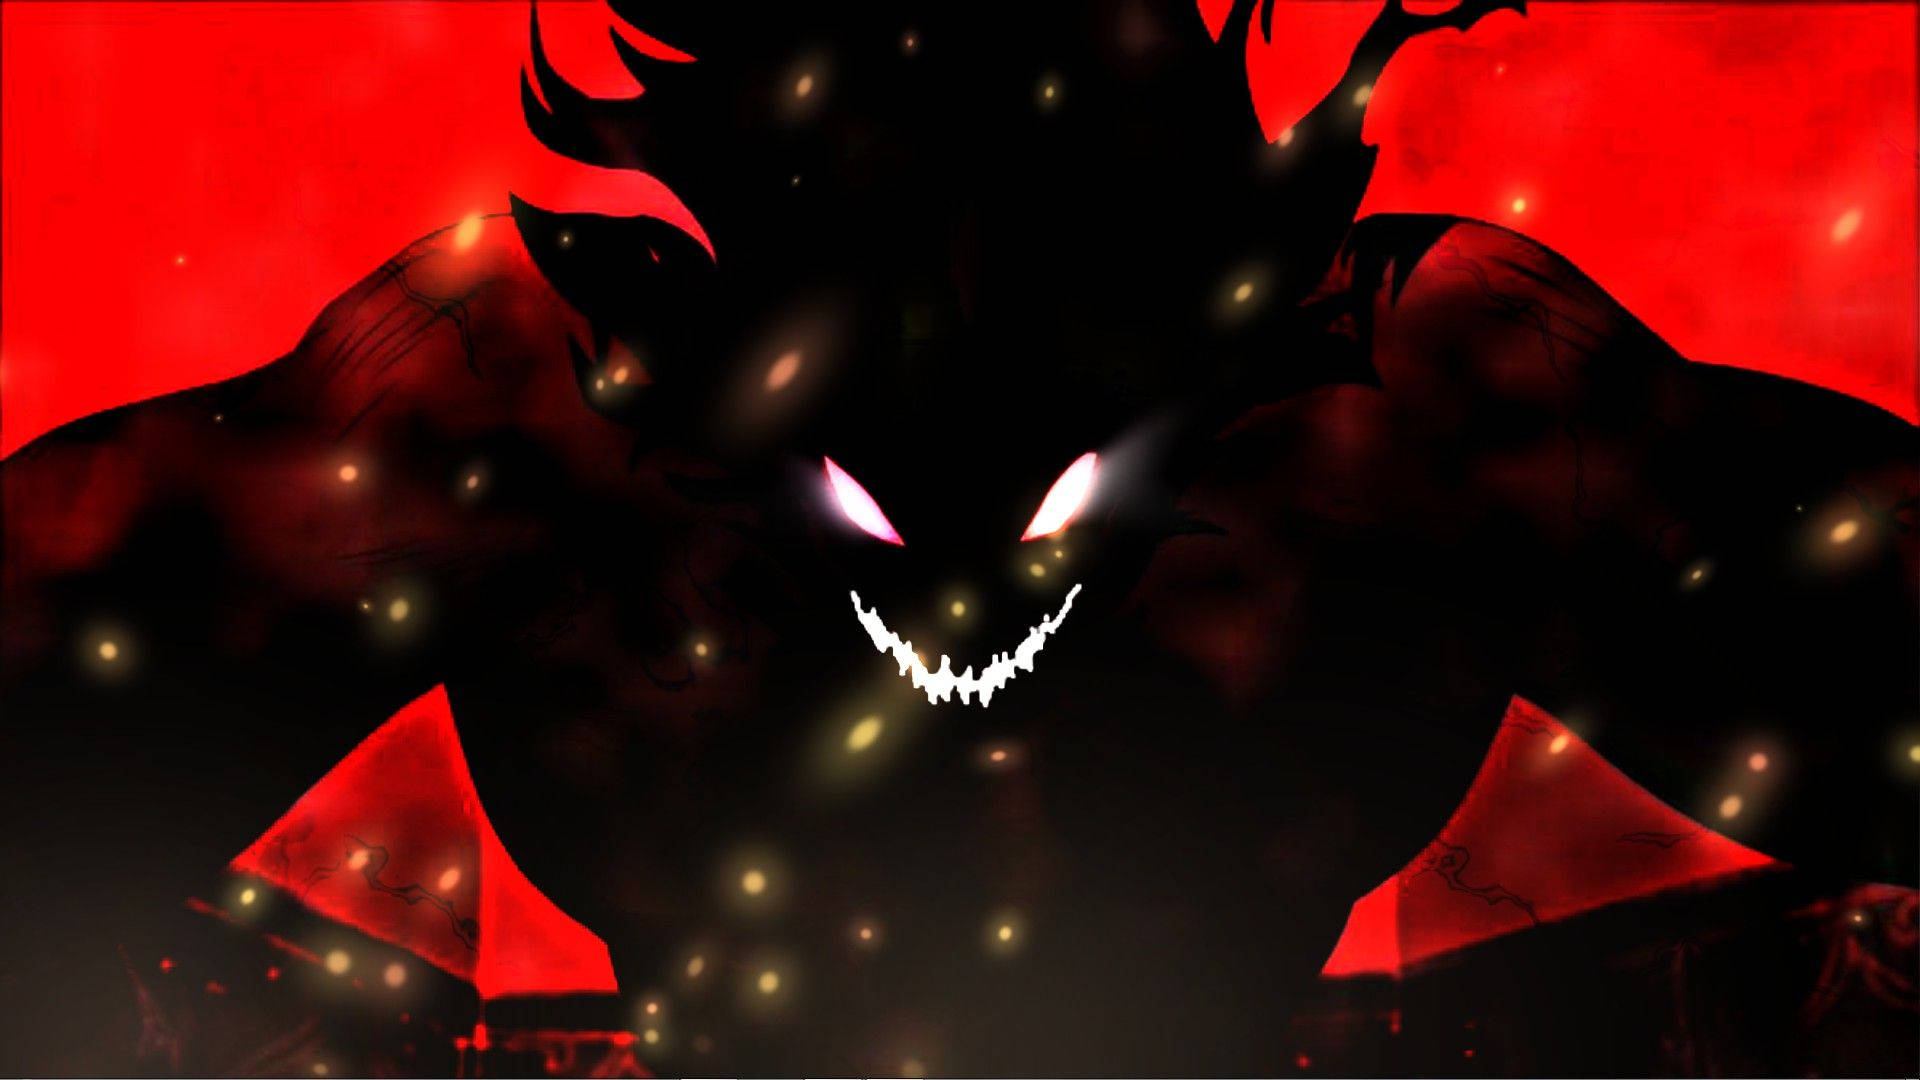 Devilman Crybaby wallpaper by Ahkioz  Download on ZEDGE  ddd0